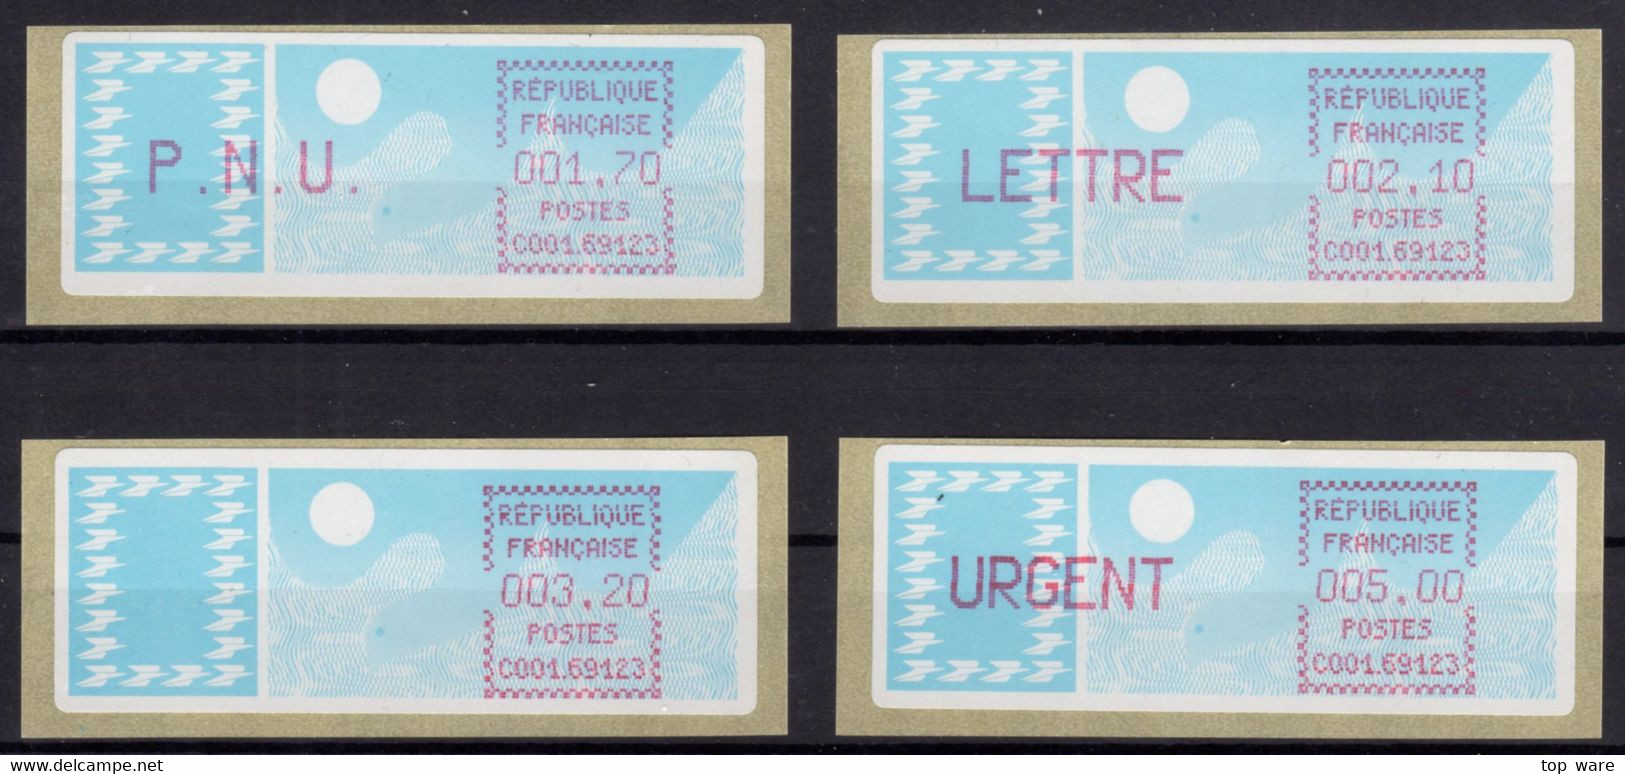 France ATM Stamps C001.69123 Michel 6.4 Zd Series ZS1 Neuf / MNH / Crouzet LSA Distributeurs Automatenmarken Frama Lisa - 1985 « Carrier » Paper